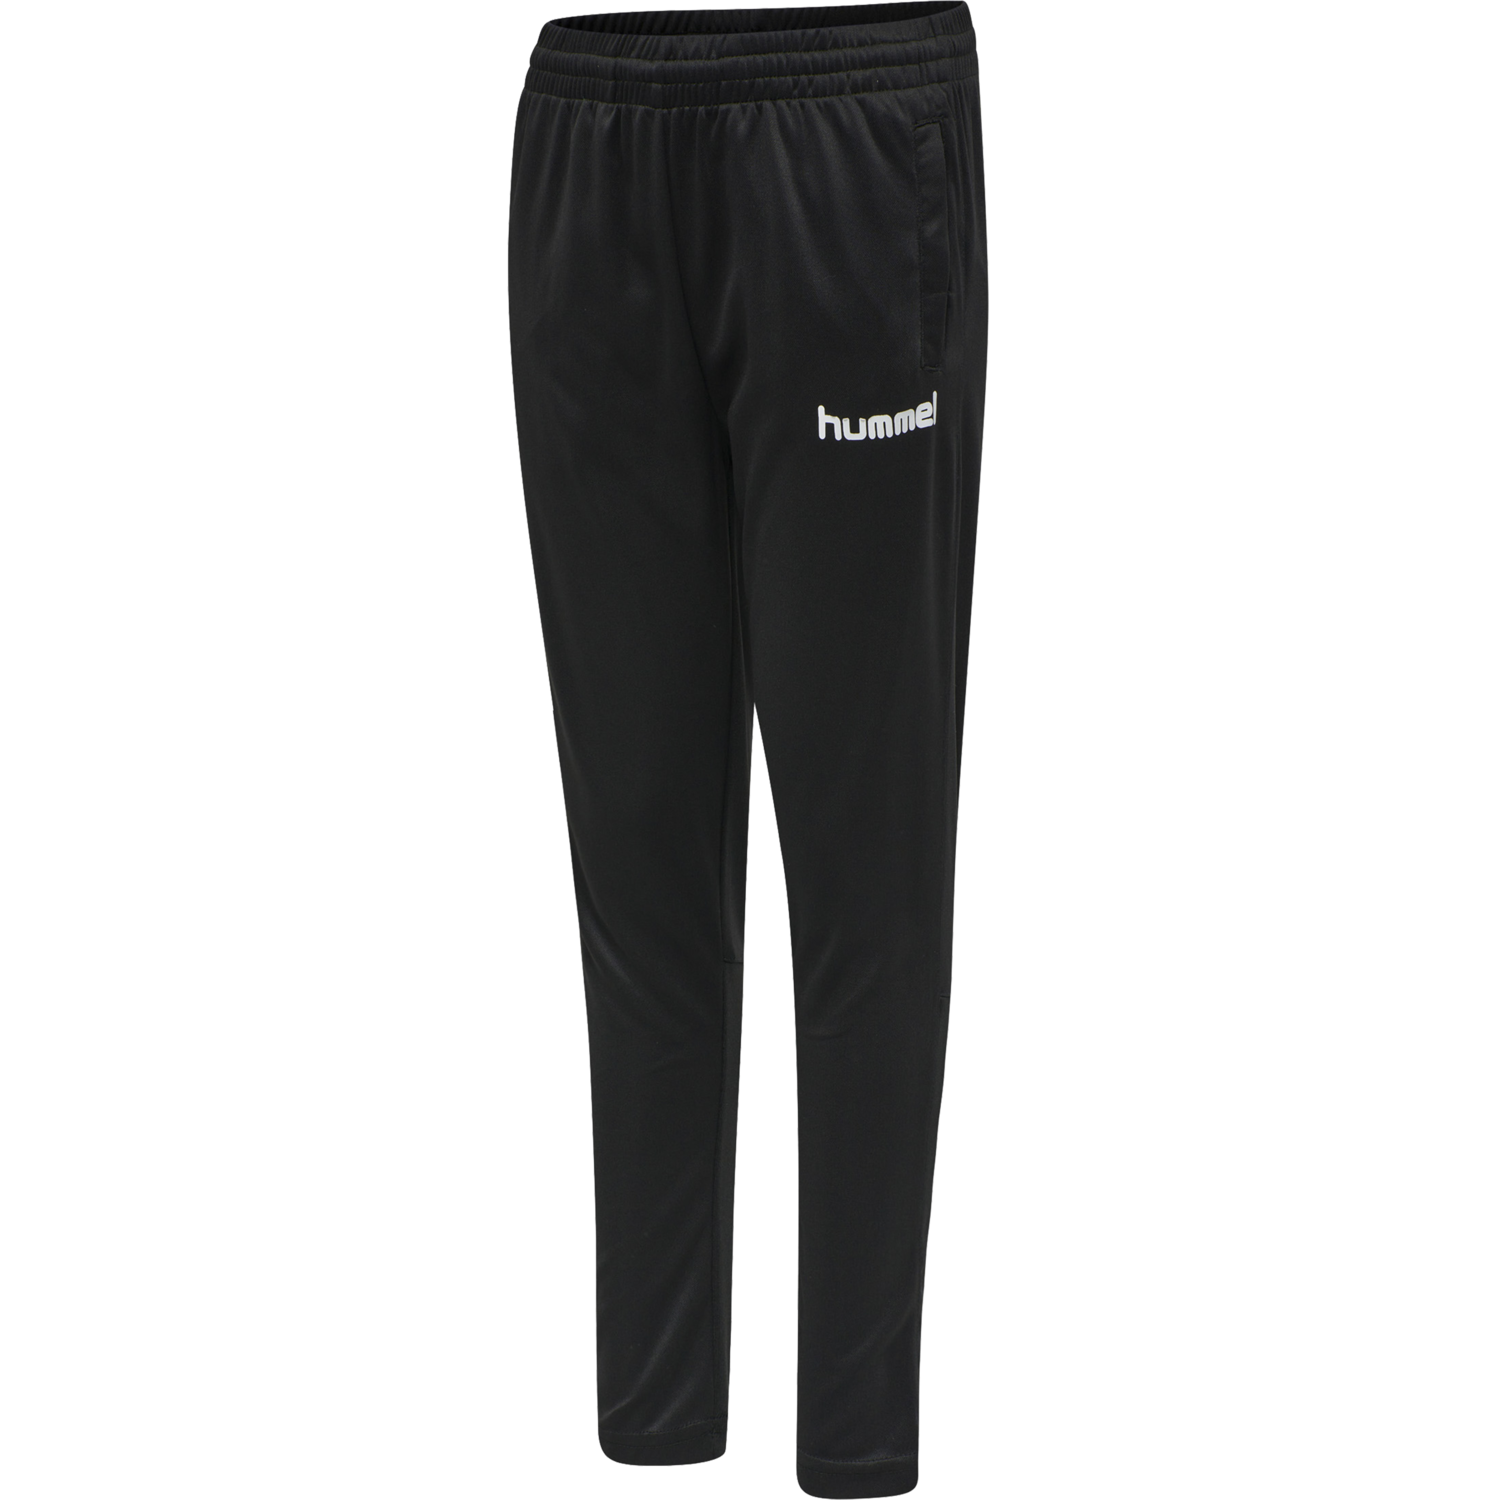 Nike Kids Dry Park18 Football Pants BlackWhite XS  Amazonin Clothing   Accessories